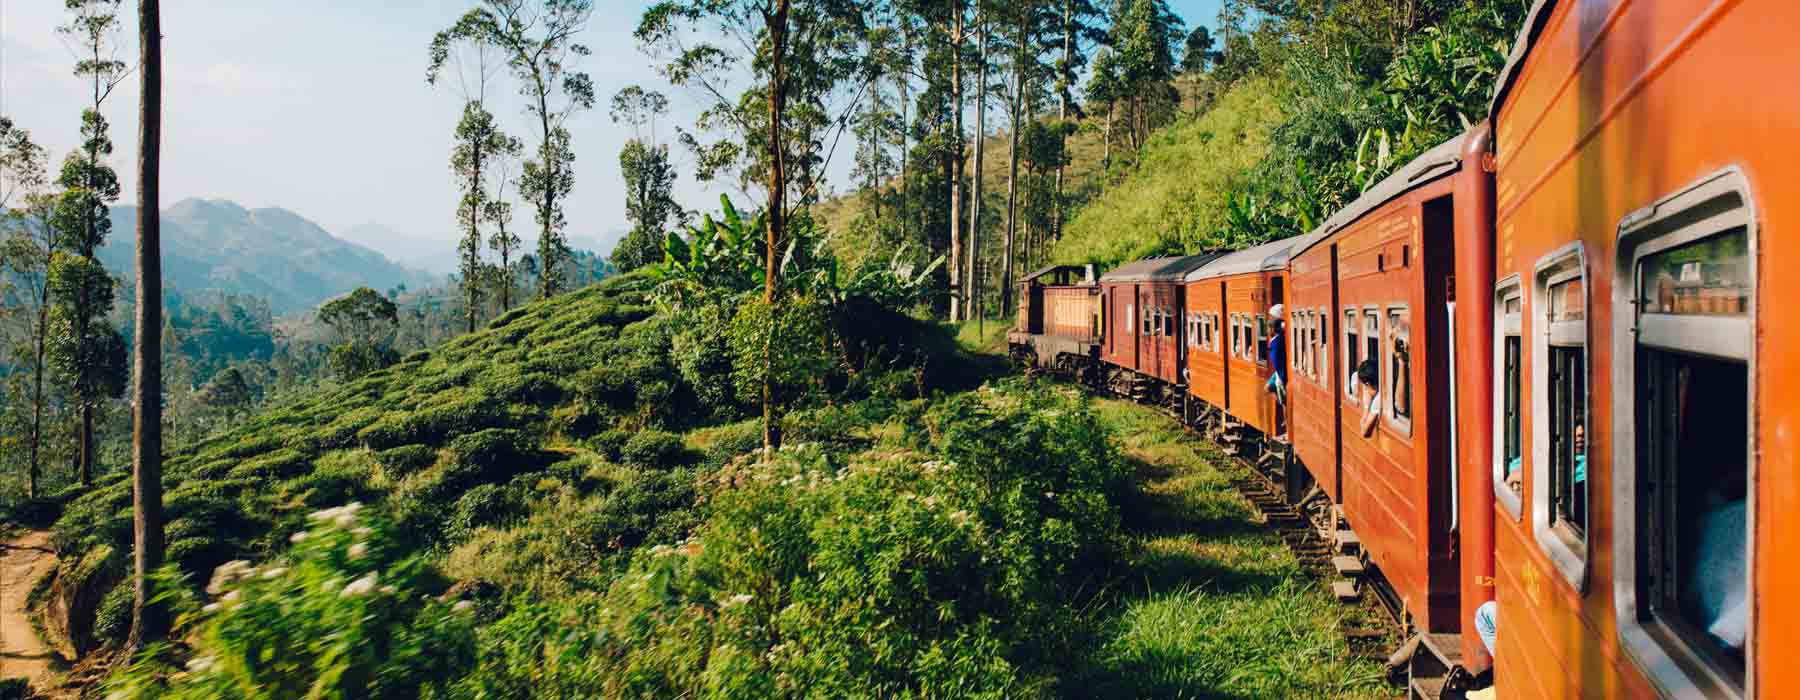 Sri Lanka<br class="hidden-md hidden-lg" /> Slow Travel